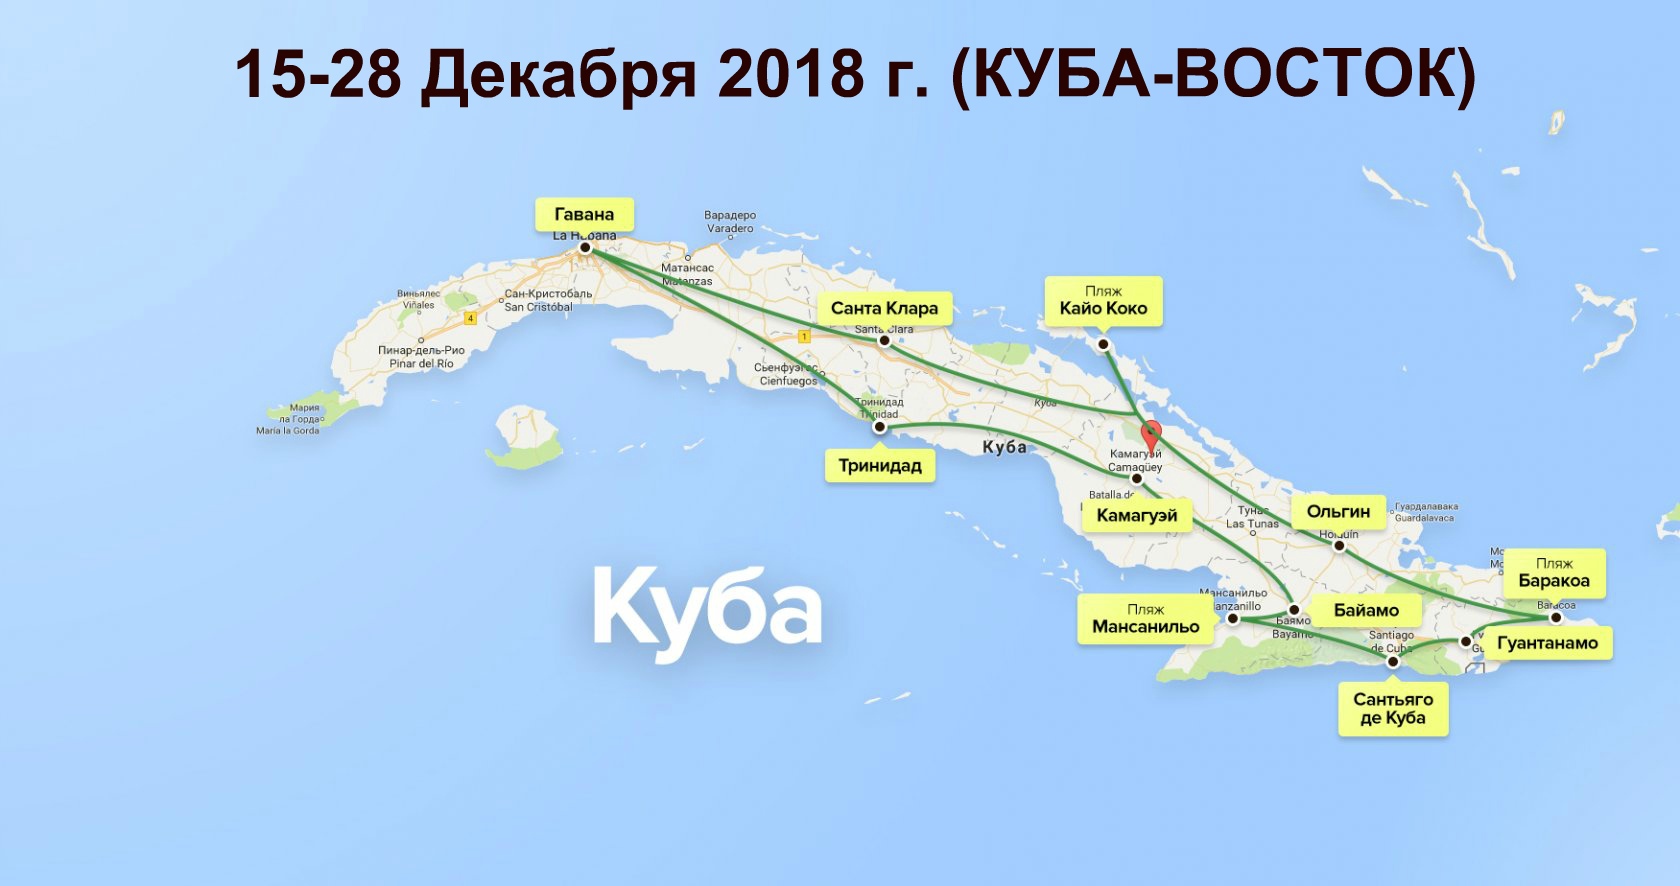 Остров Кайо Коко Куба на карте